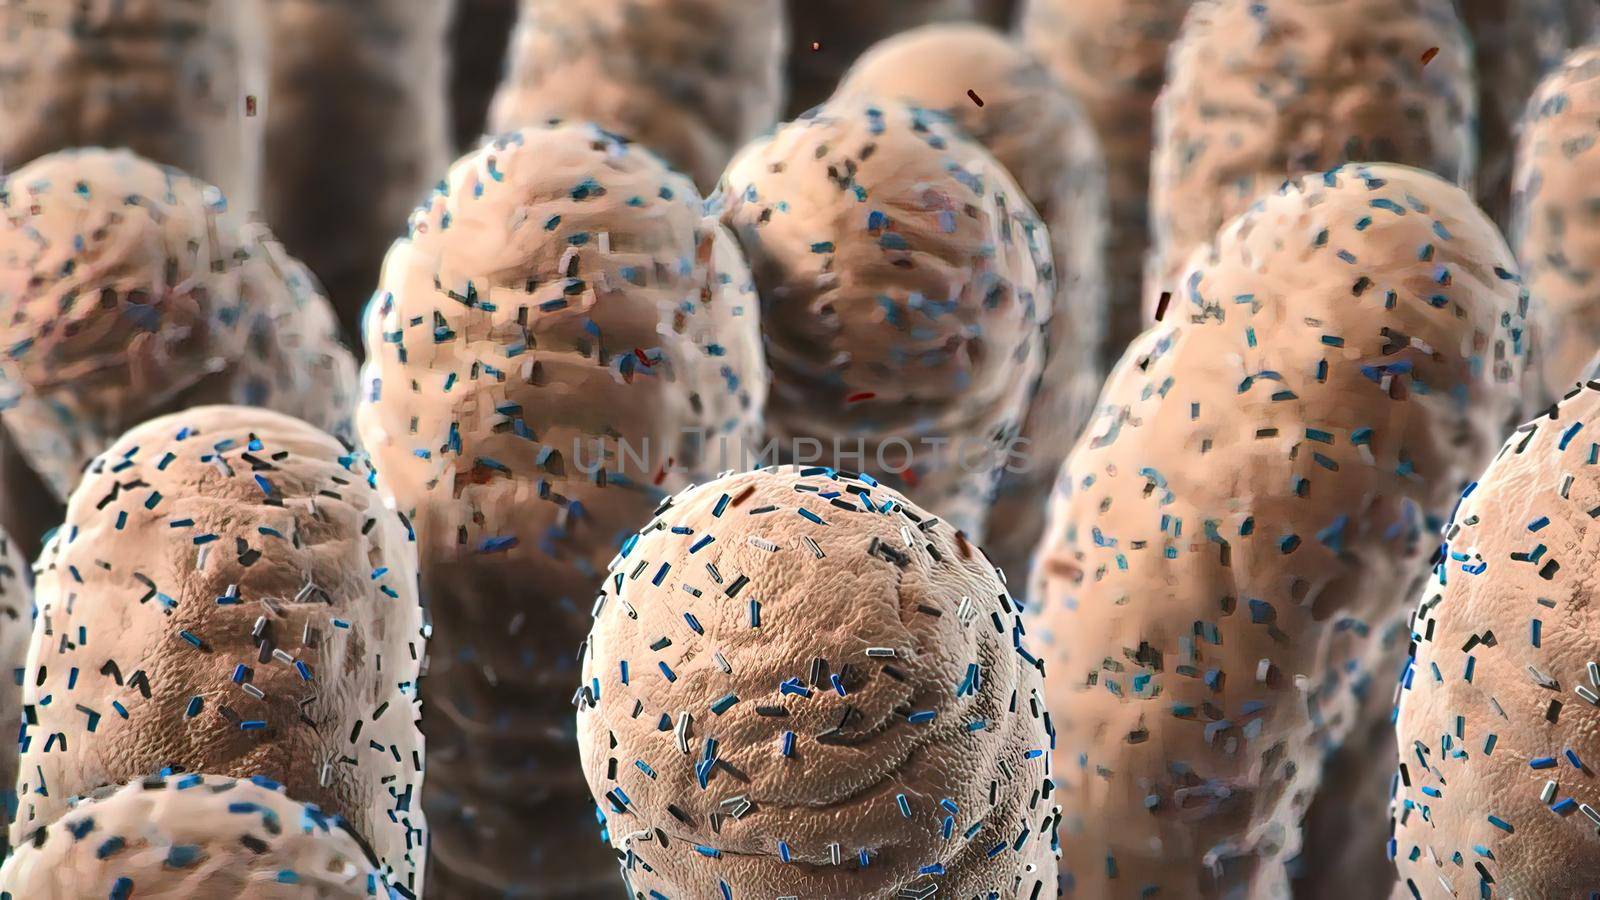 Bacteria Lactobacillus in human intestine, 3D illustration. Normal flora of small intestine, lactic acid bacteria. Probiotic bacterium